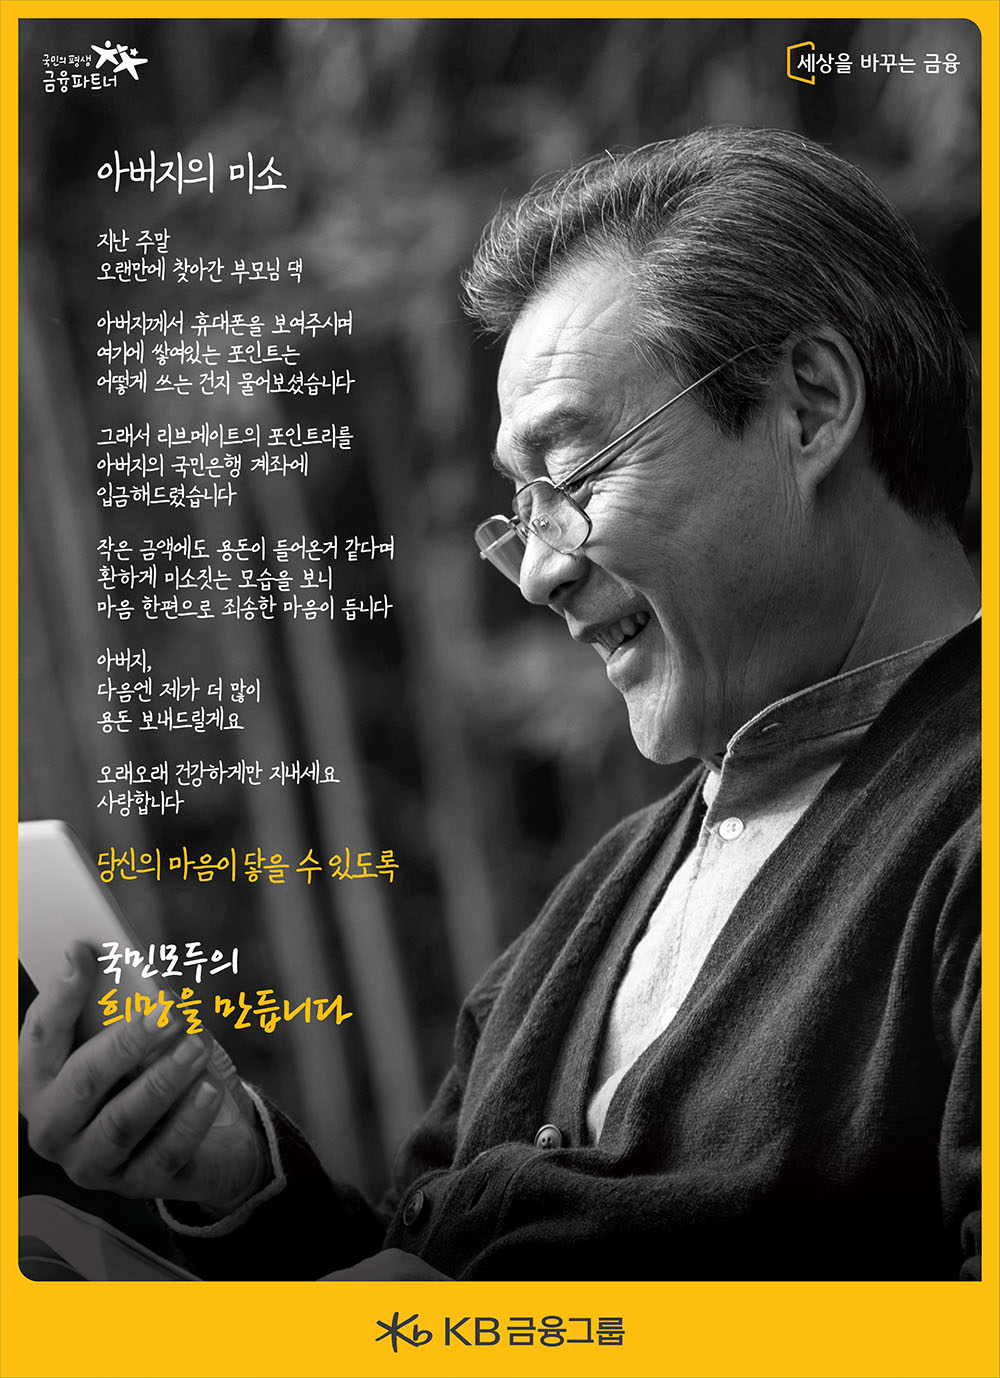 - Kookmin Hope Campaign - ① father's smile